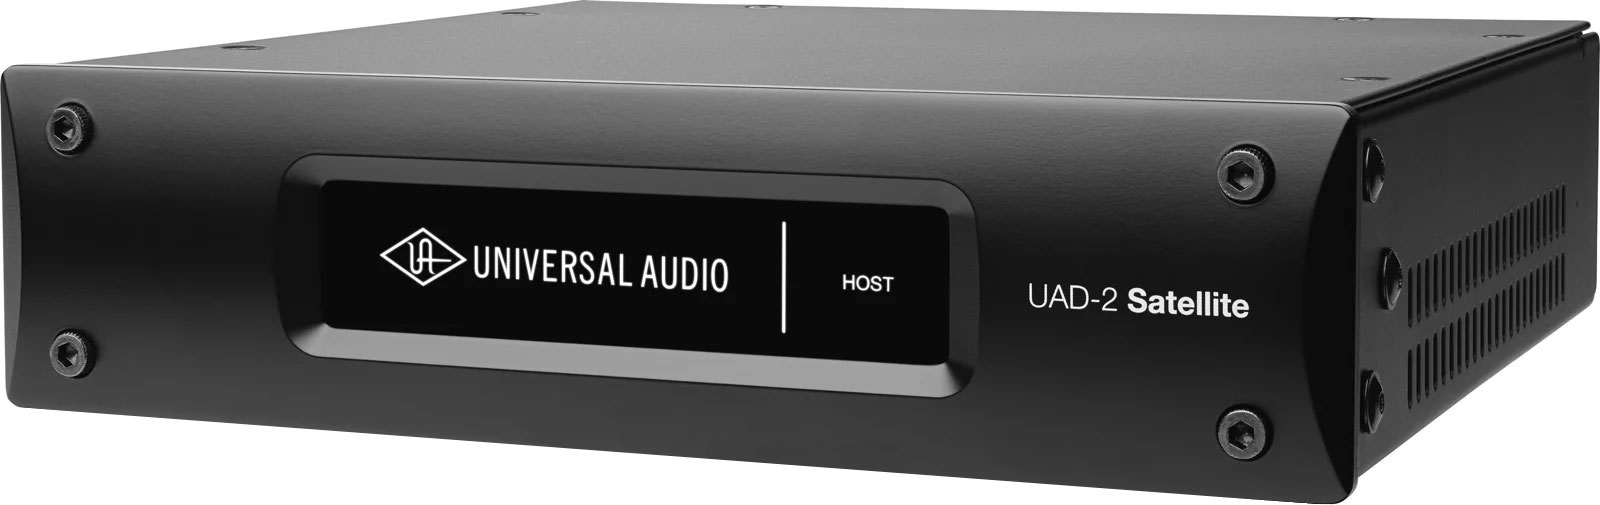 UNIVERSAL AUDIO UAD-2 SATELLITE OCTO USB